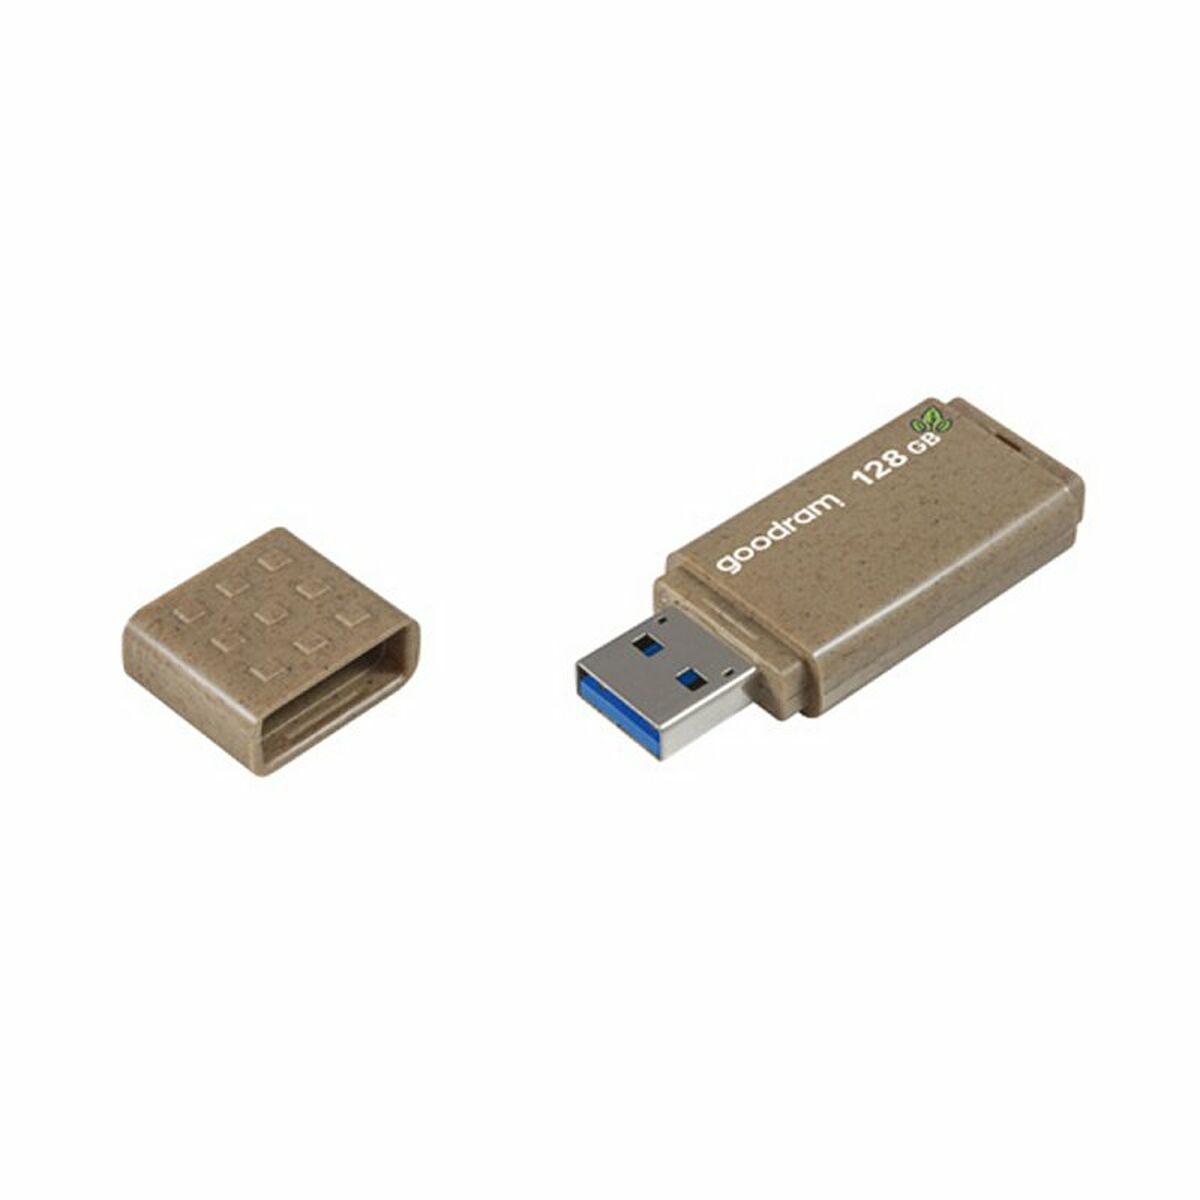 USB Pendrive GoodRam UME3 Eco Friendly Braun 128 GB